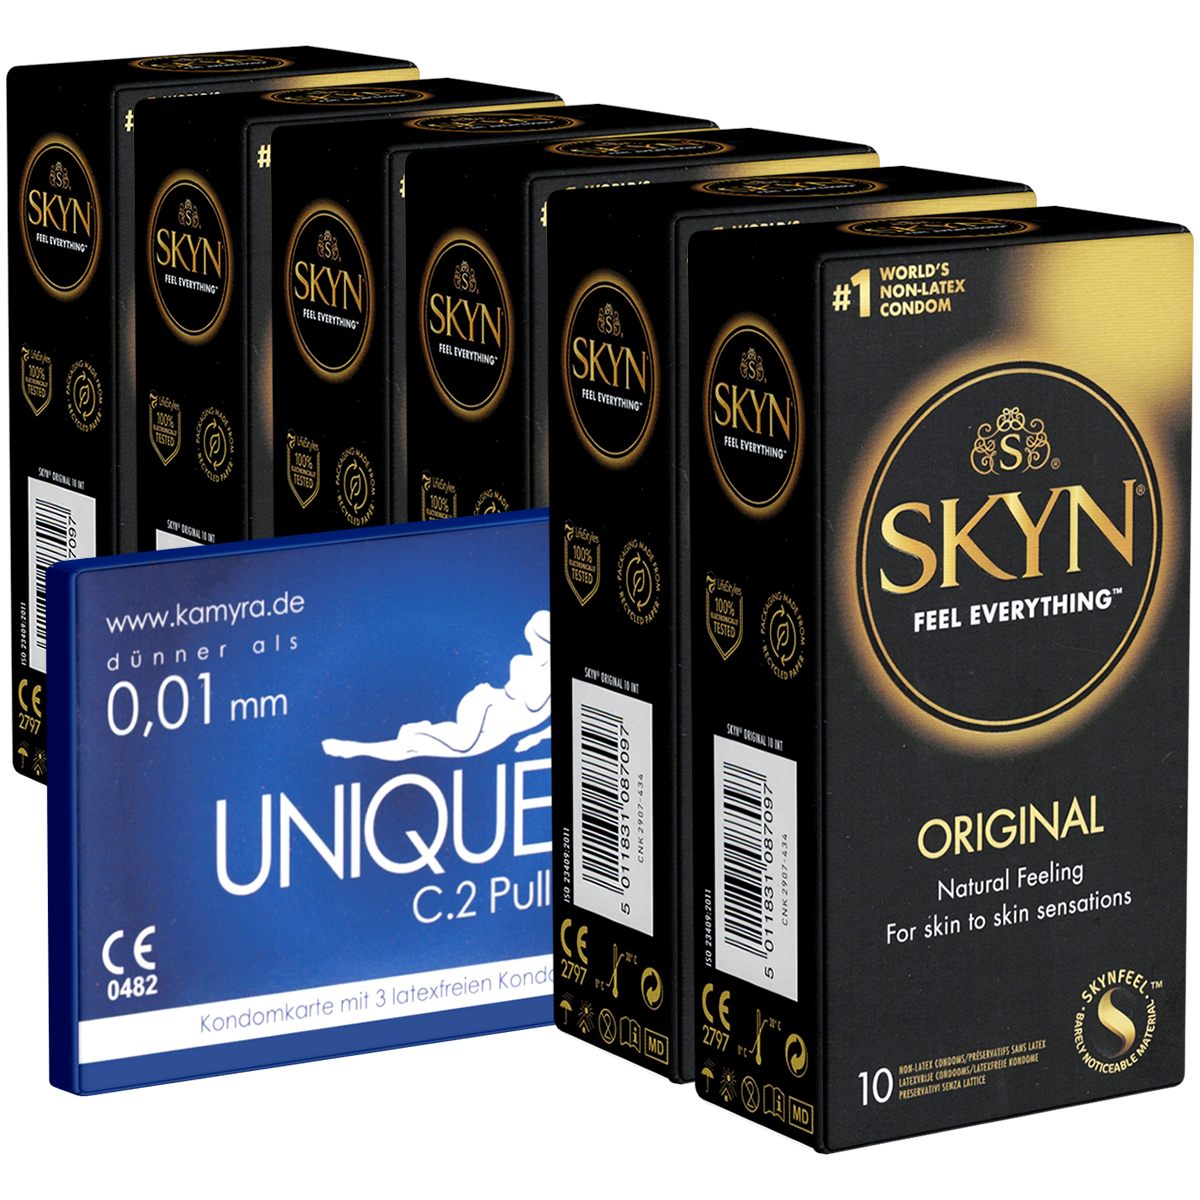 SKYN «Original» 60 (6x10) latex free condoms + 1x Kamyra Unique Pull for free